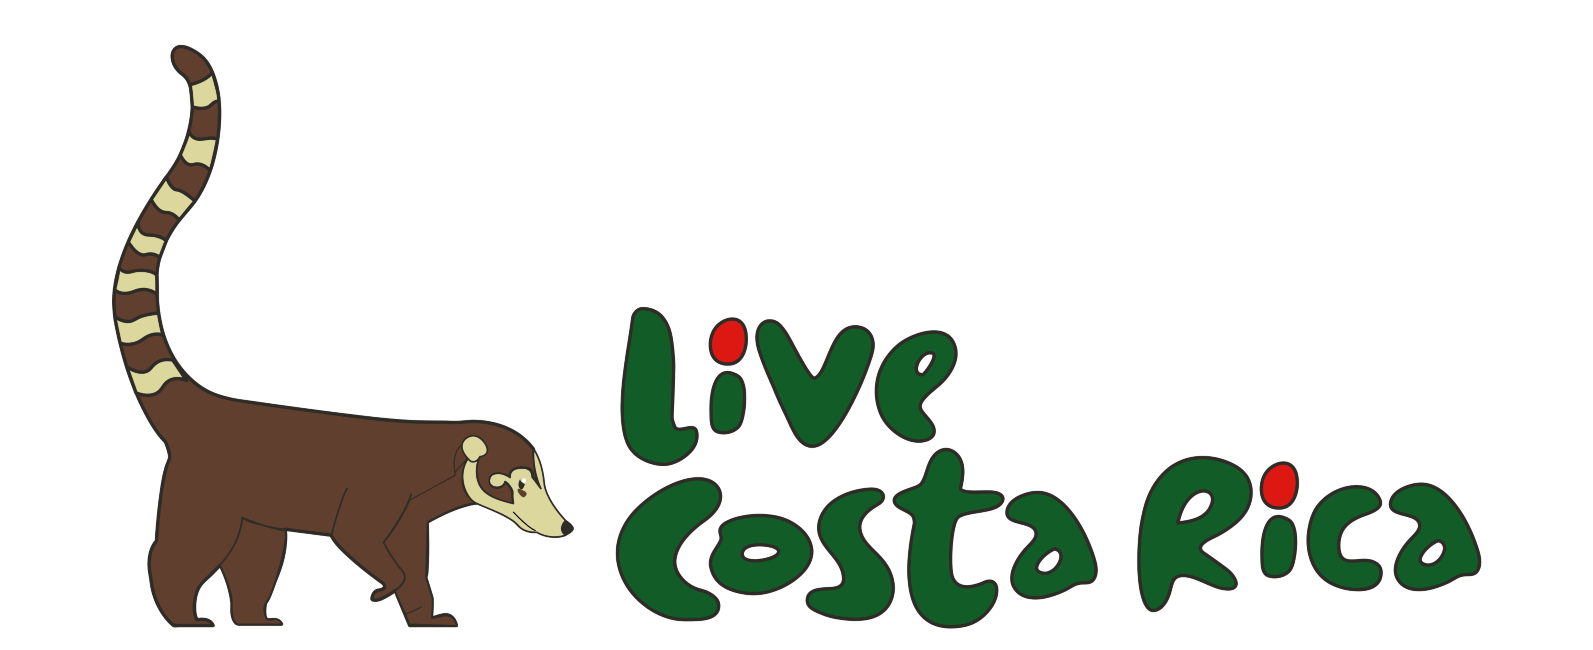 Live Costa Rica Travel |   Search results